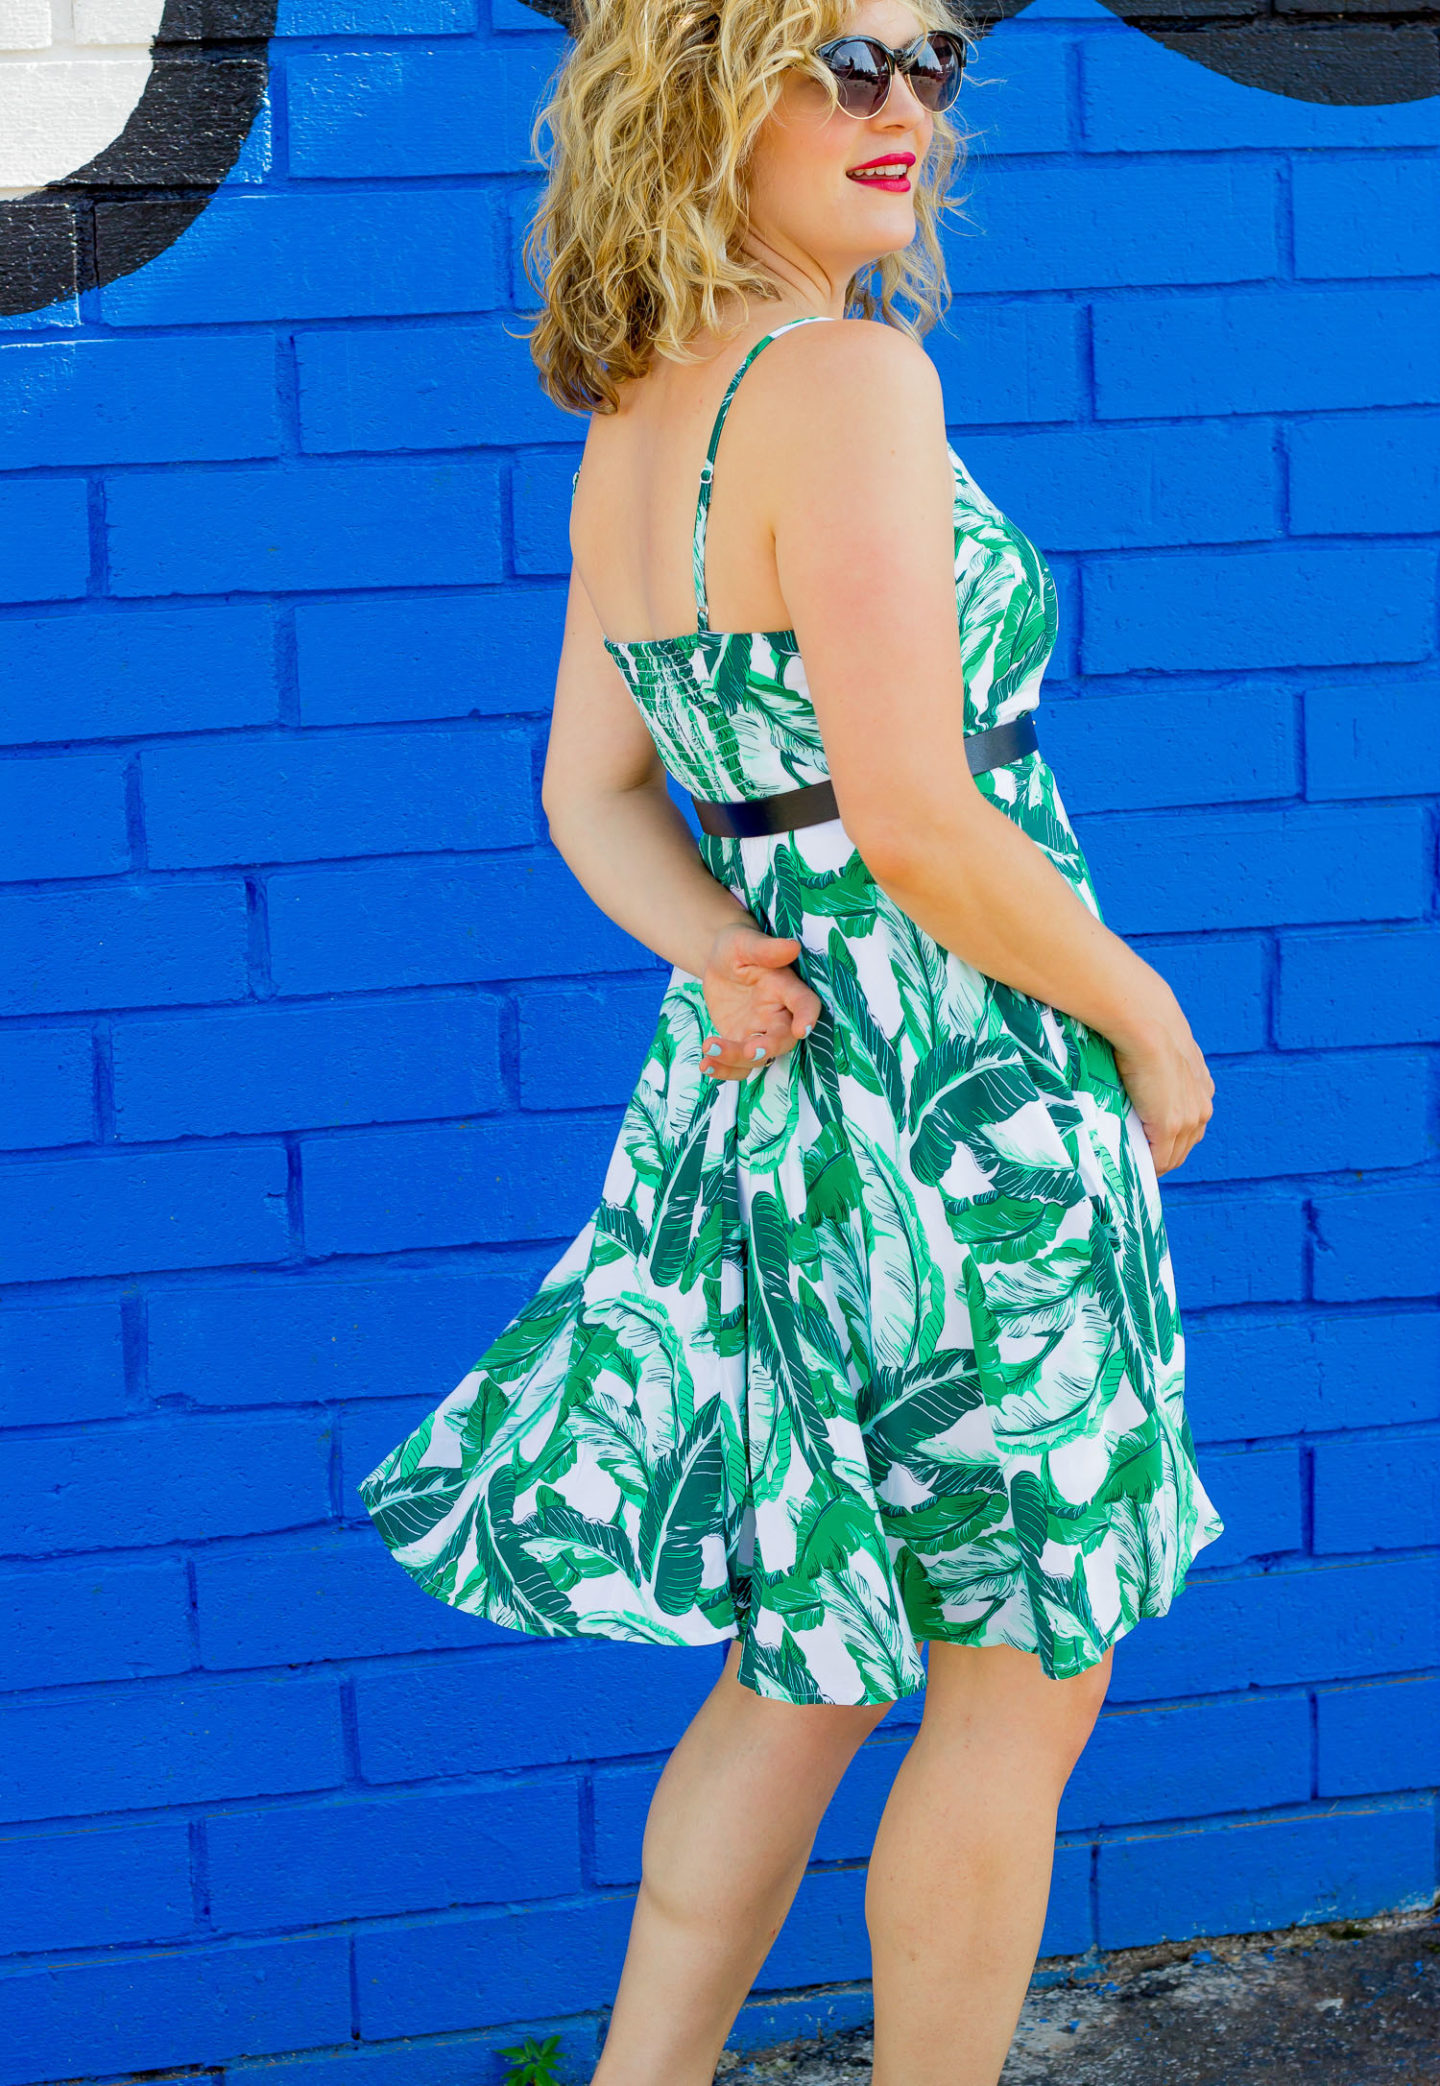 Palm Print Sun Dress worn by Elise Giannasi of Belle Meets World blog